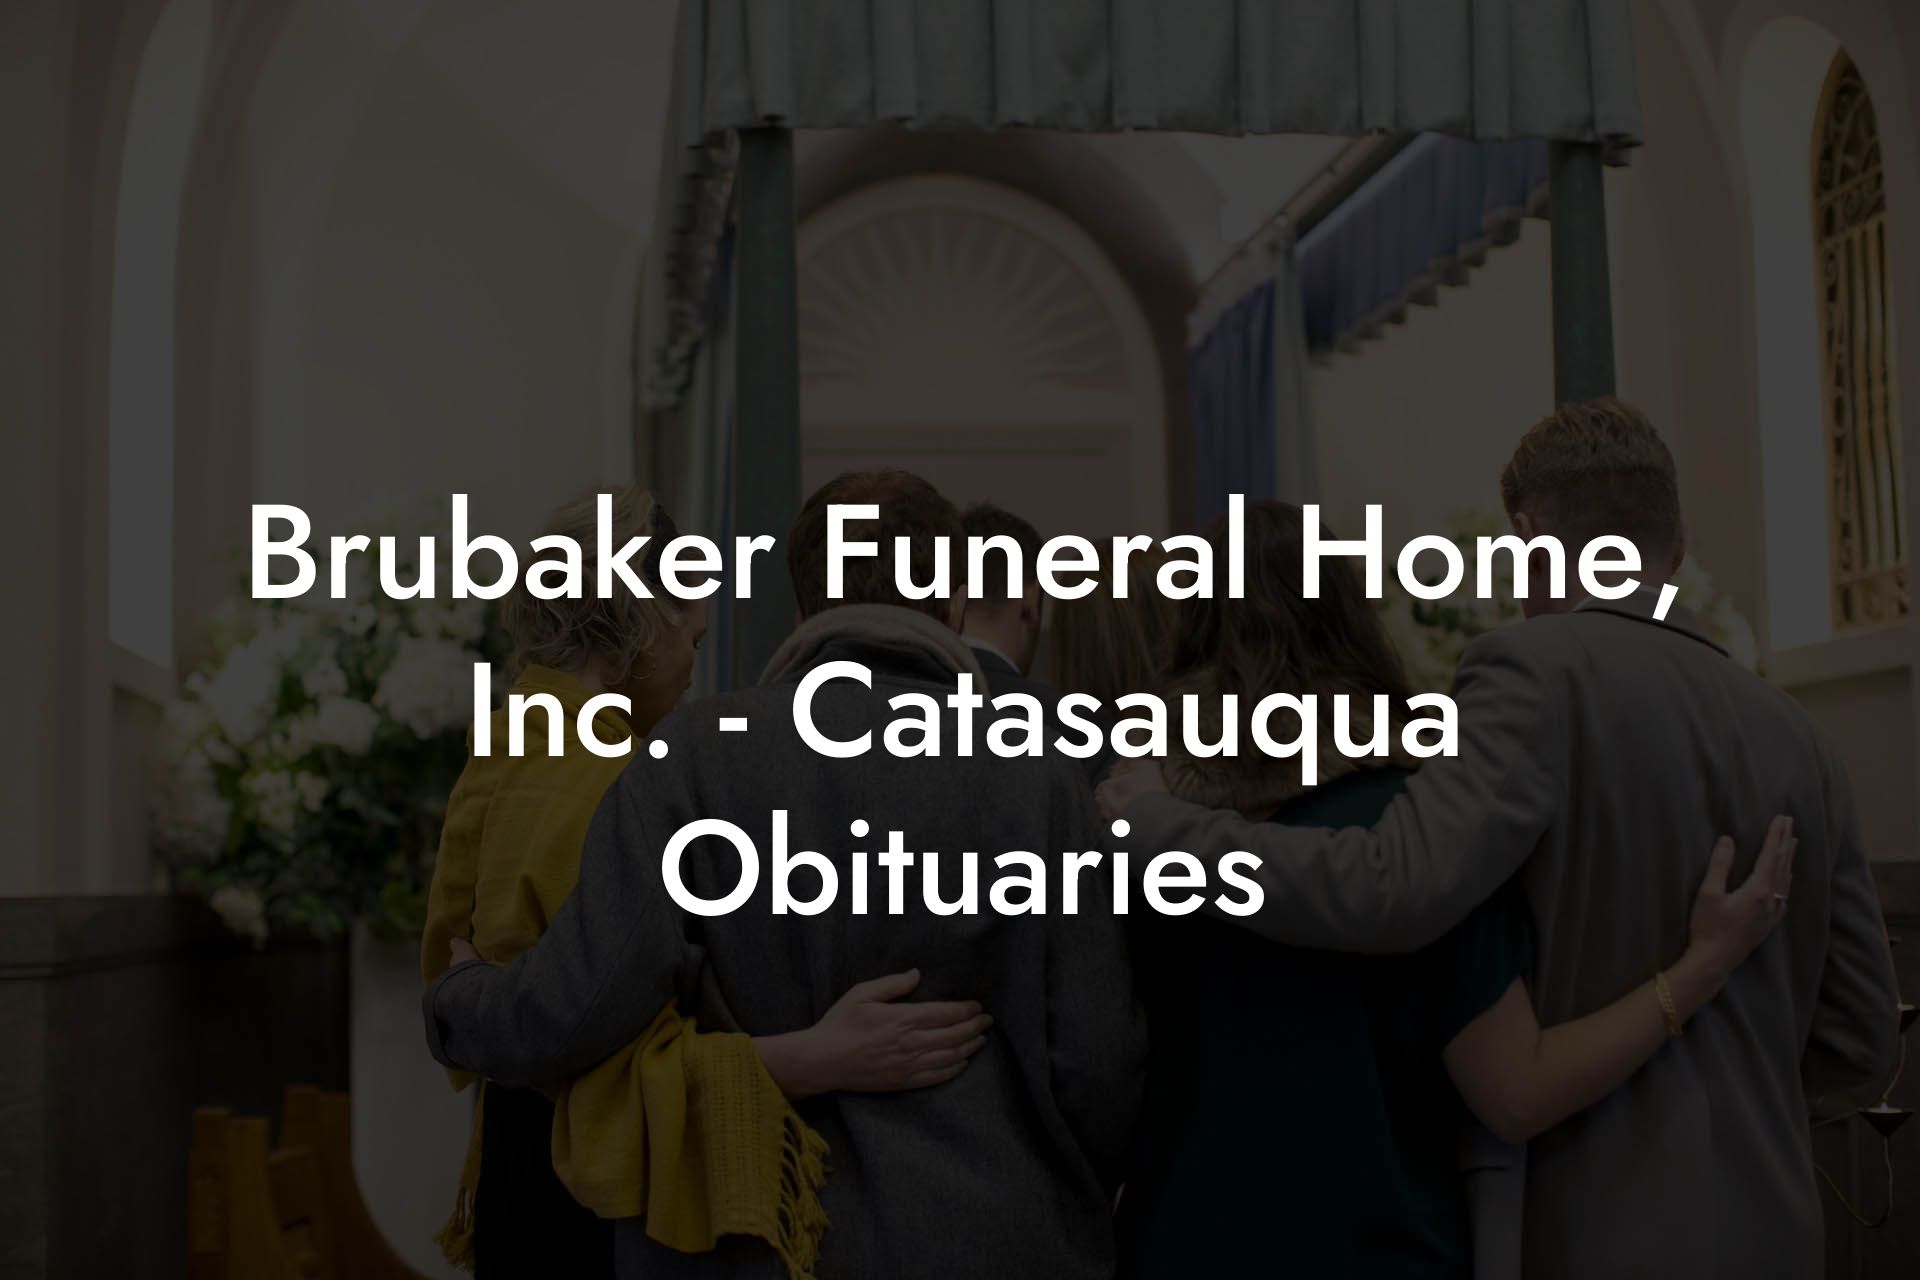 Brubaker Funeral Home, Inc. - Catasauqua Obituaries